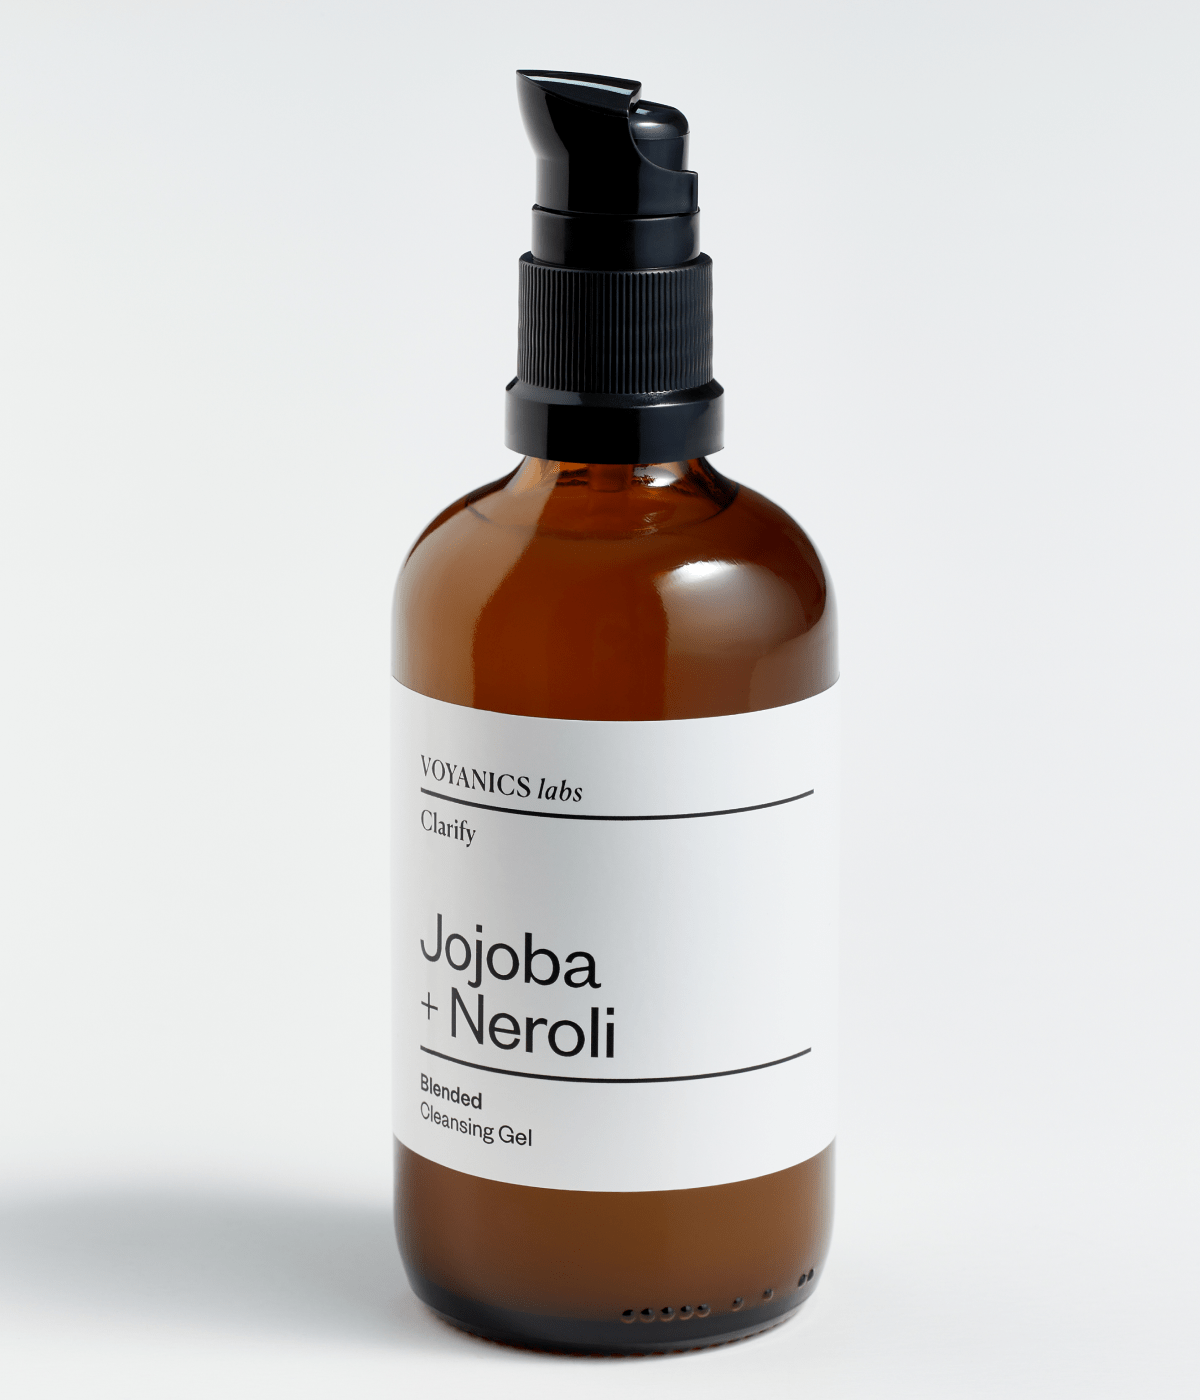 Jojoba + Neroli Cleansing Gel - Voyanics